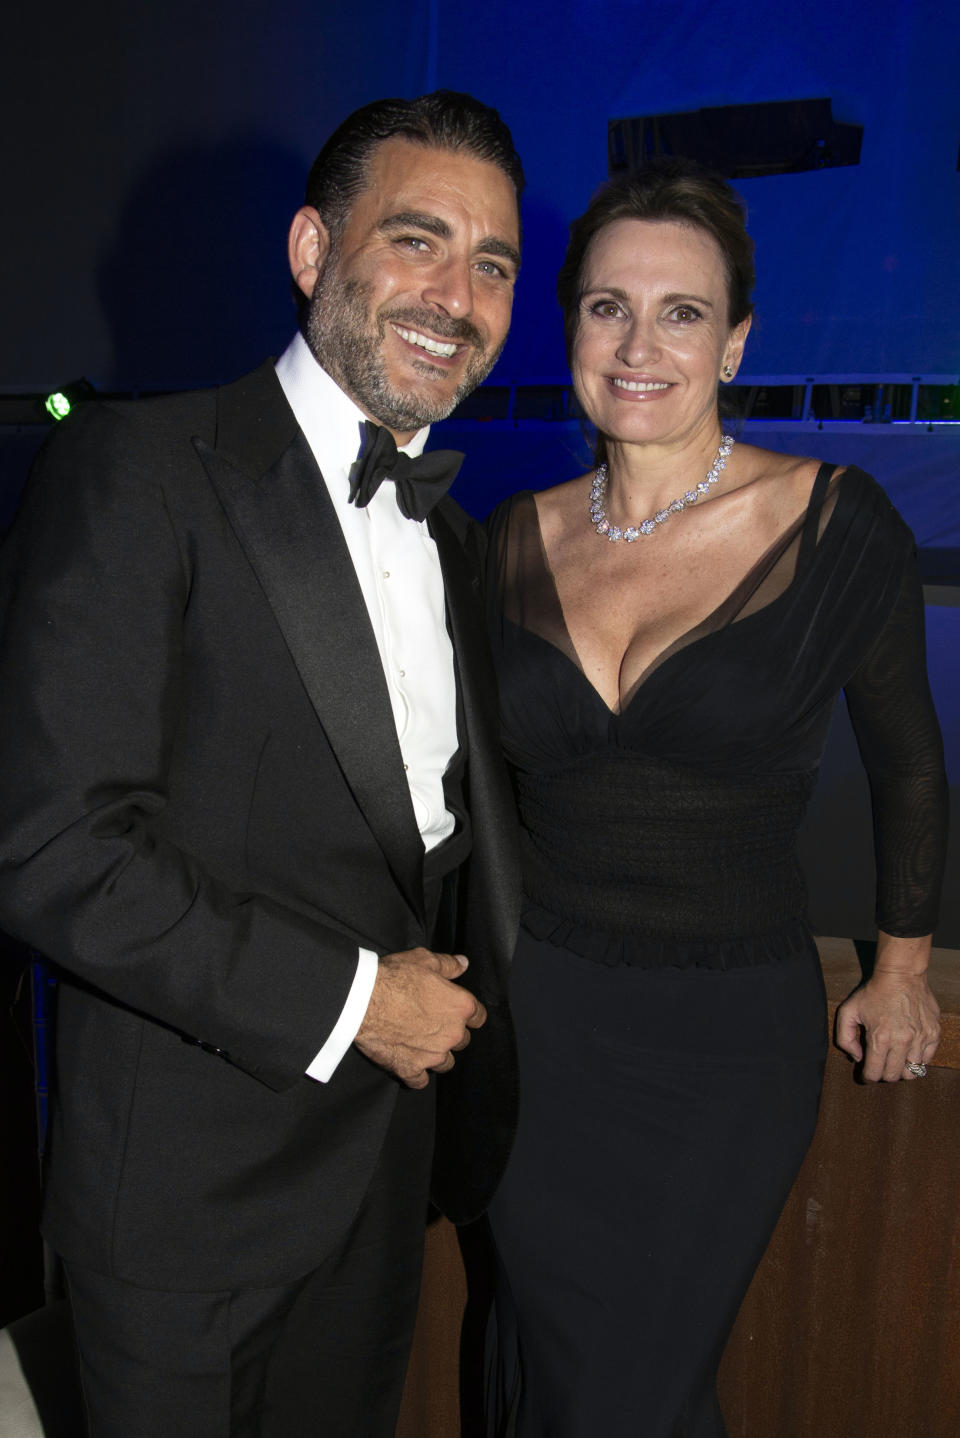 MARBELLA<SPAIN - AUGUST 11: Matias Urrea and Ainhoa Arteta attend the Starlite Gala on August 11, 2018 in Marbella, Spain. (Photo by Europa Press via Getty Images)